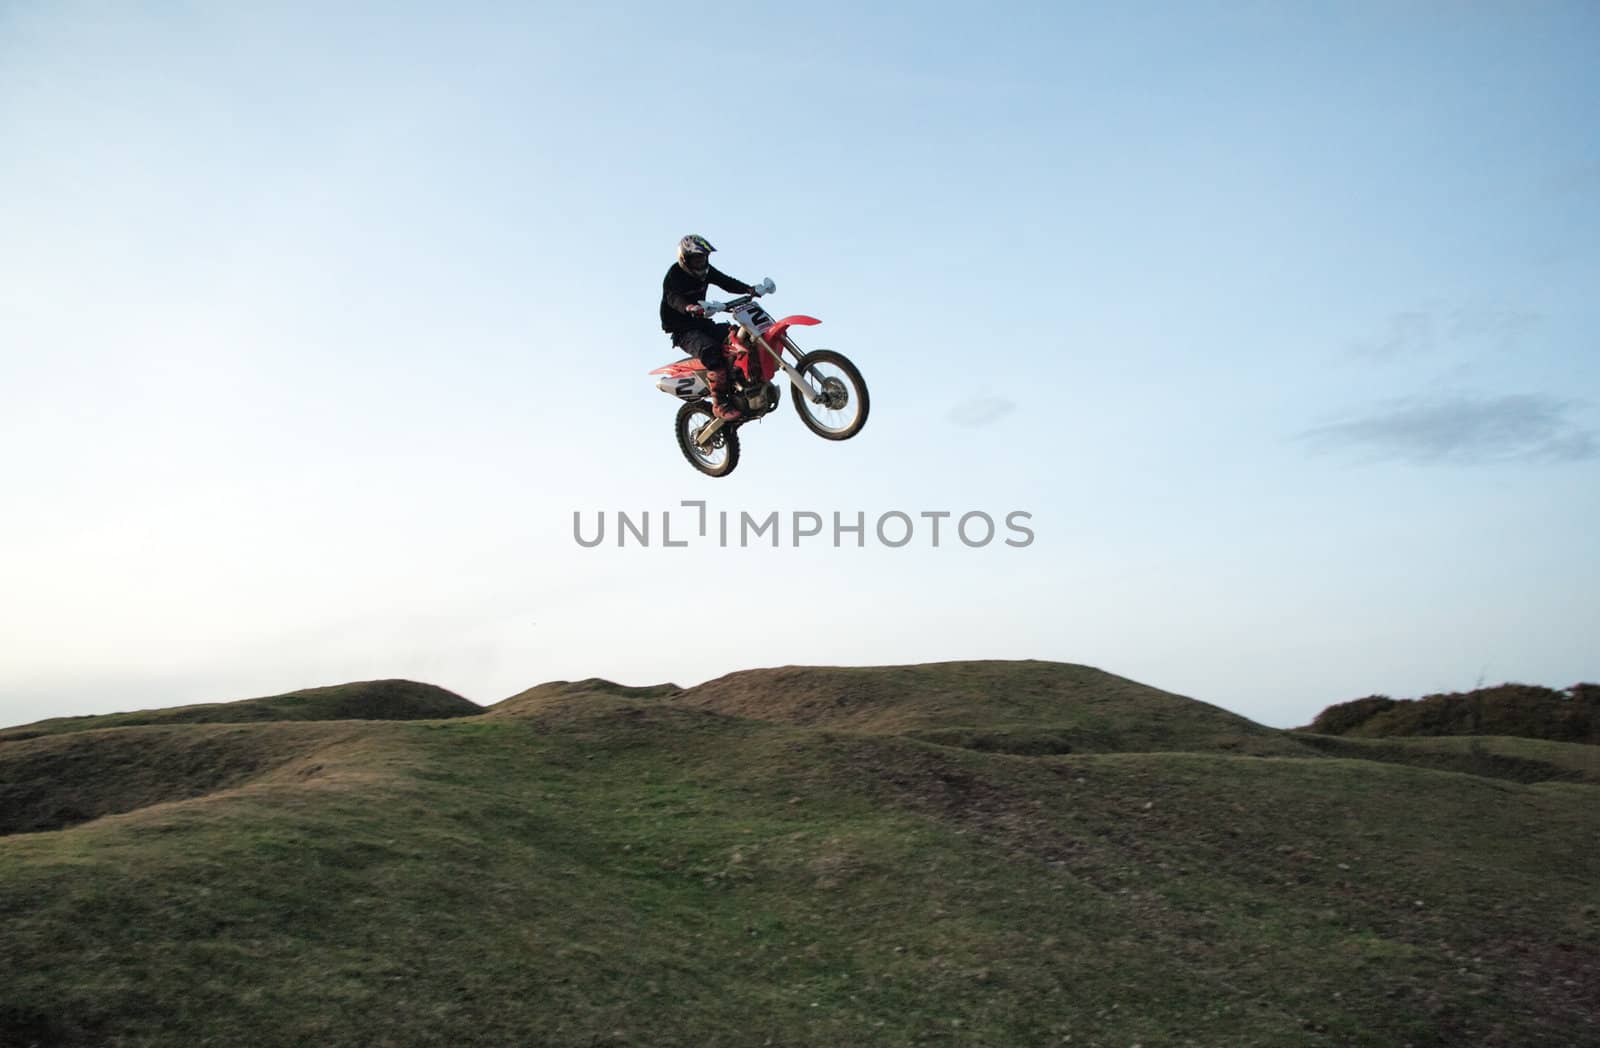 Motor cross rider jumping through the air